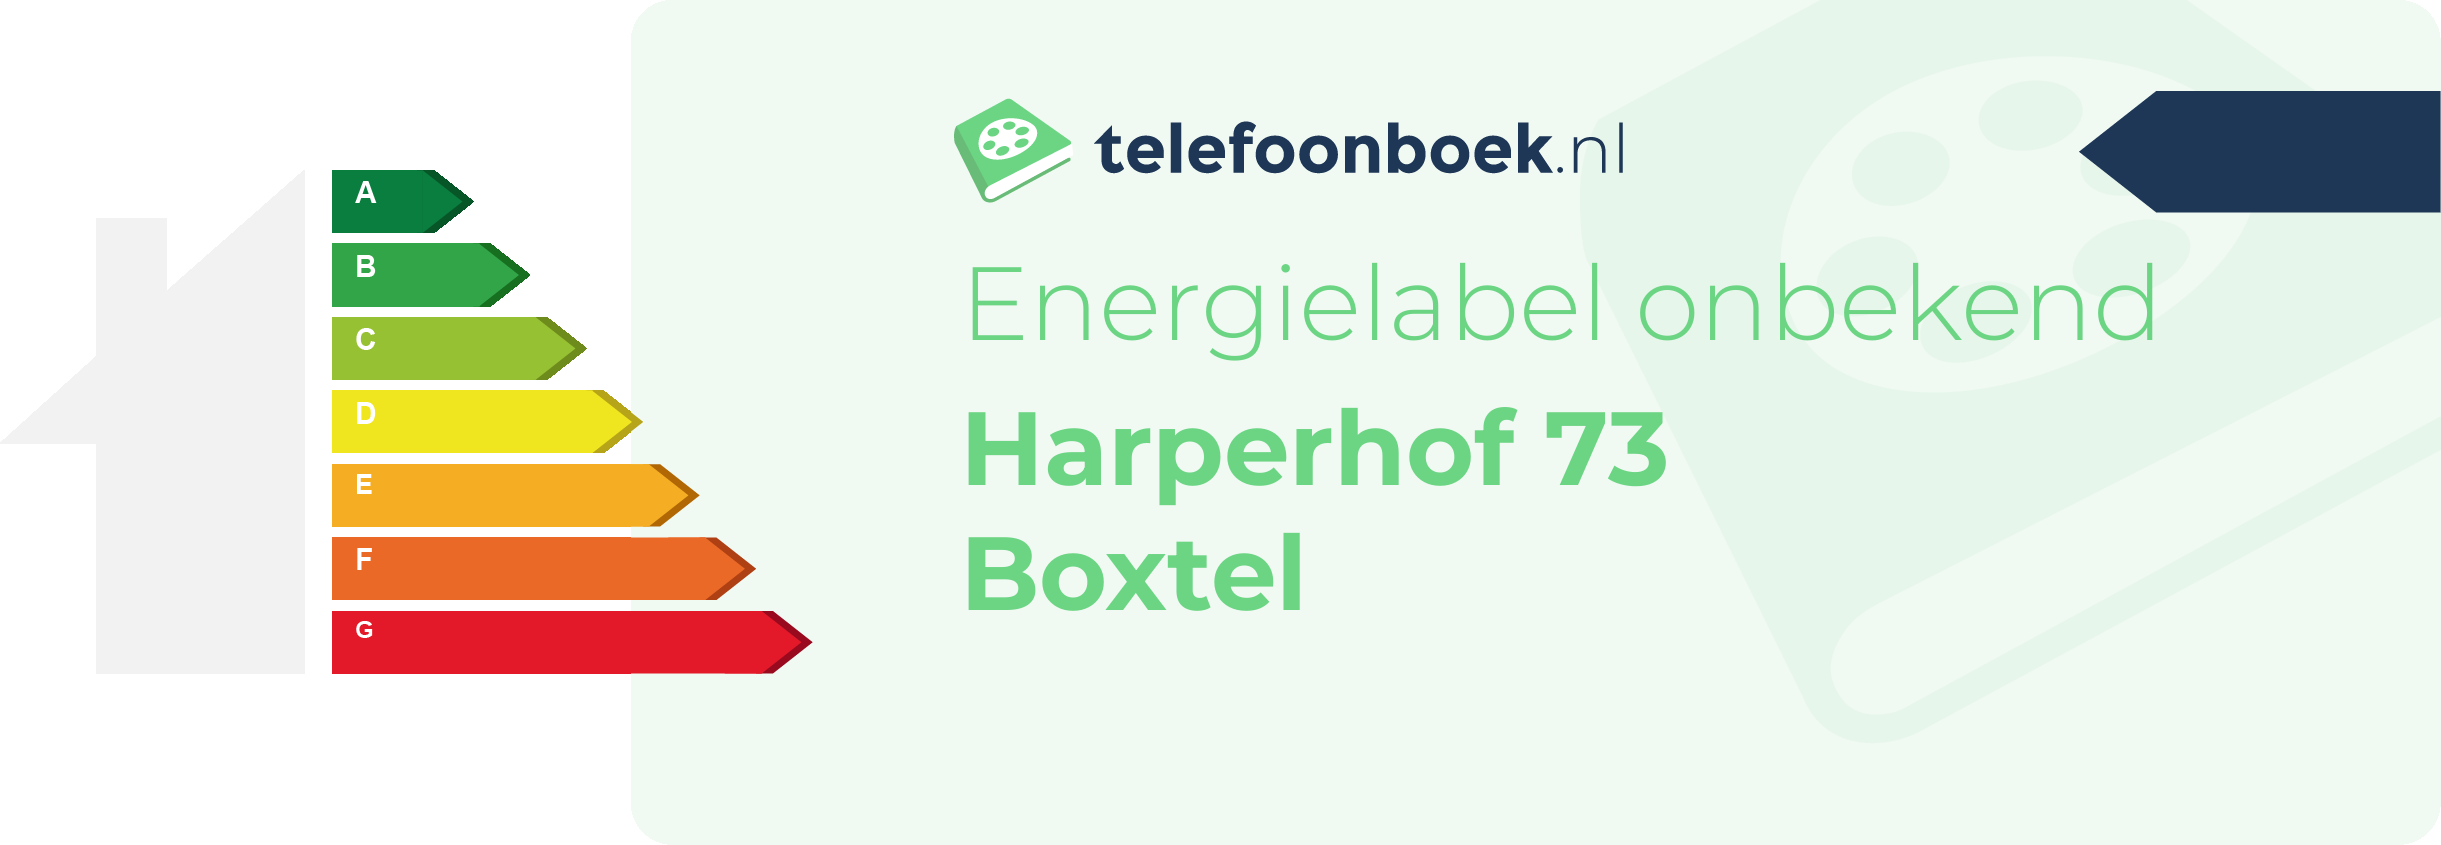 Energielabel Harperhof 73 Boxtel